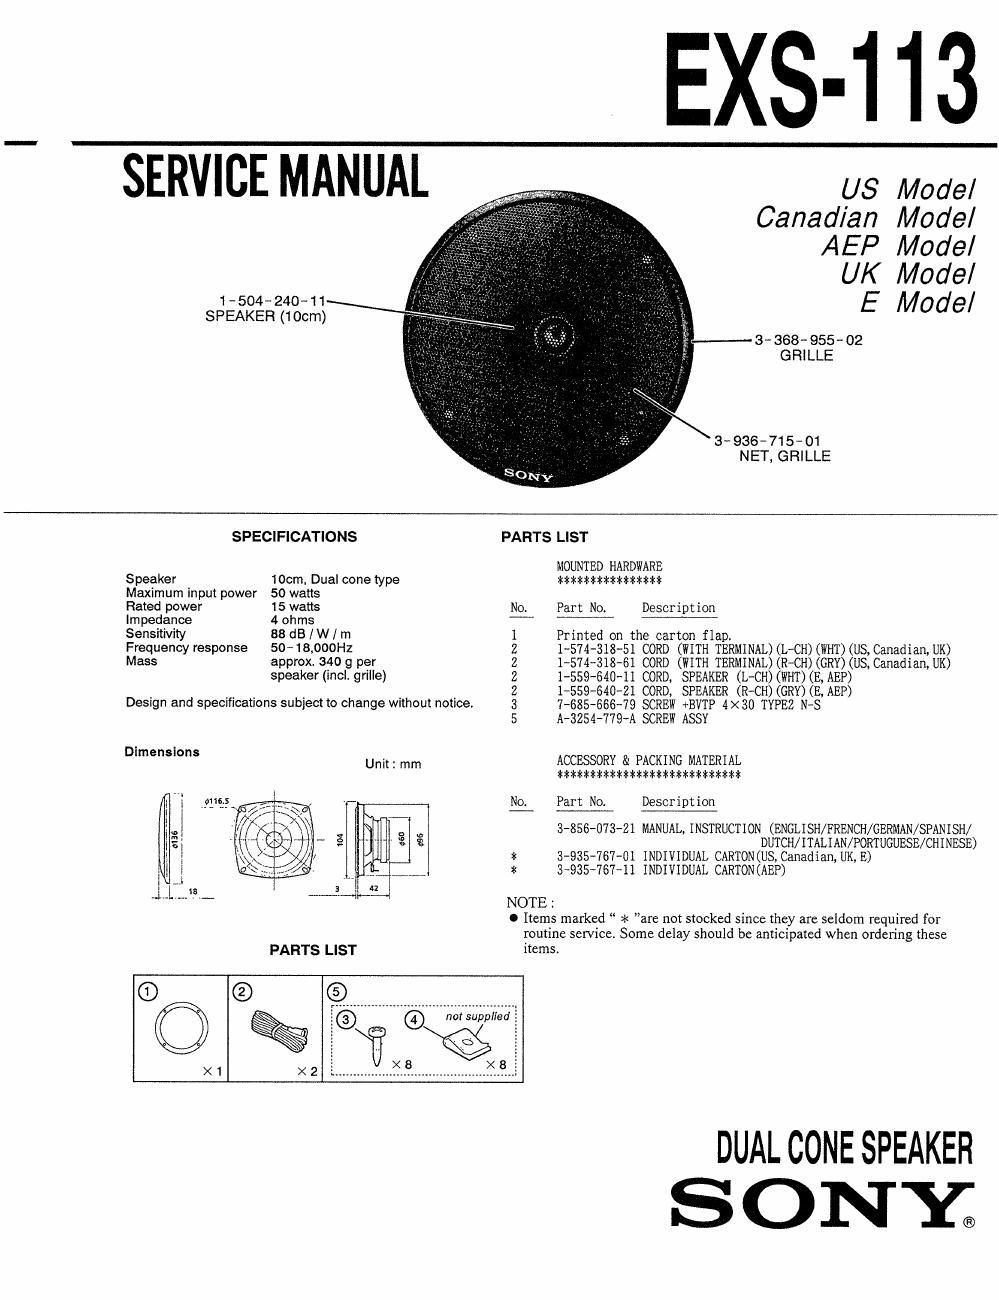 sony exs 113 service manual